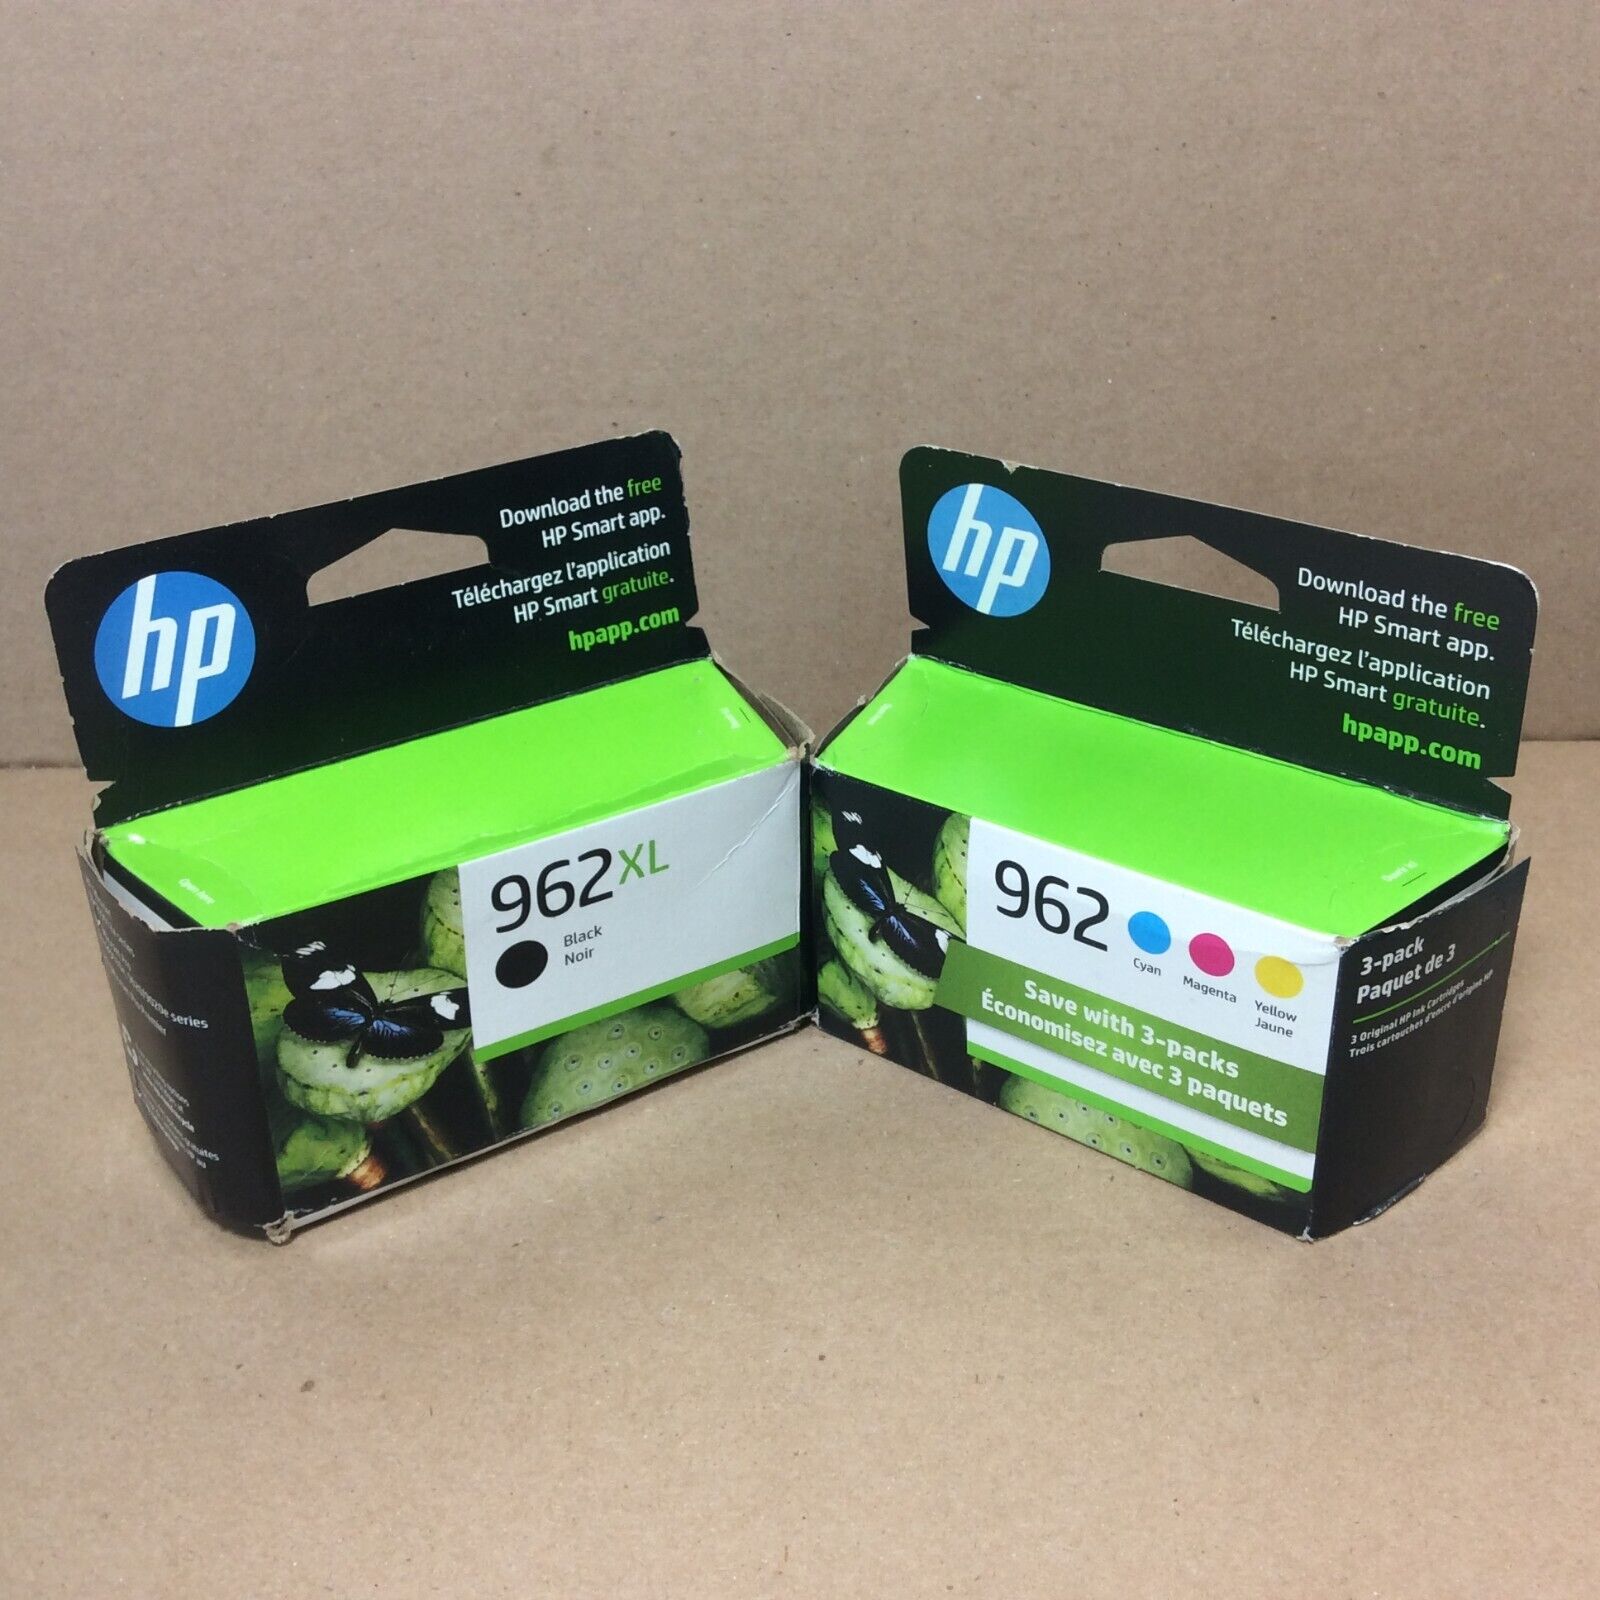 HP 962XL High Yield Black 962 Cyan/Magenta/Yellow Ink Cartridges Exp 2025 - NEW